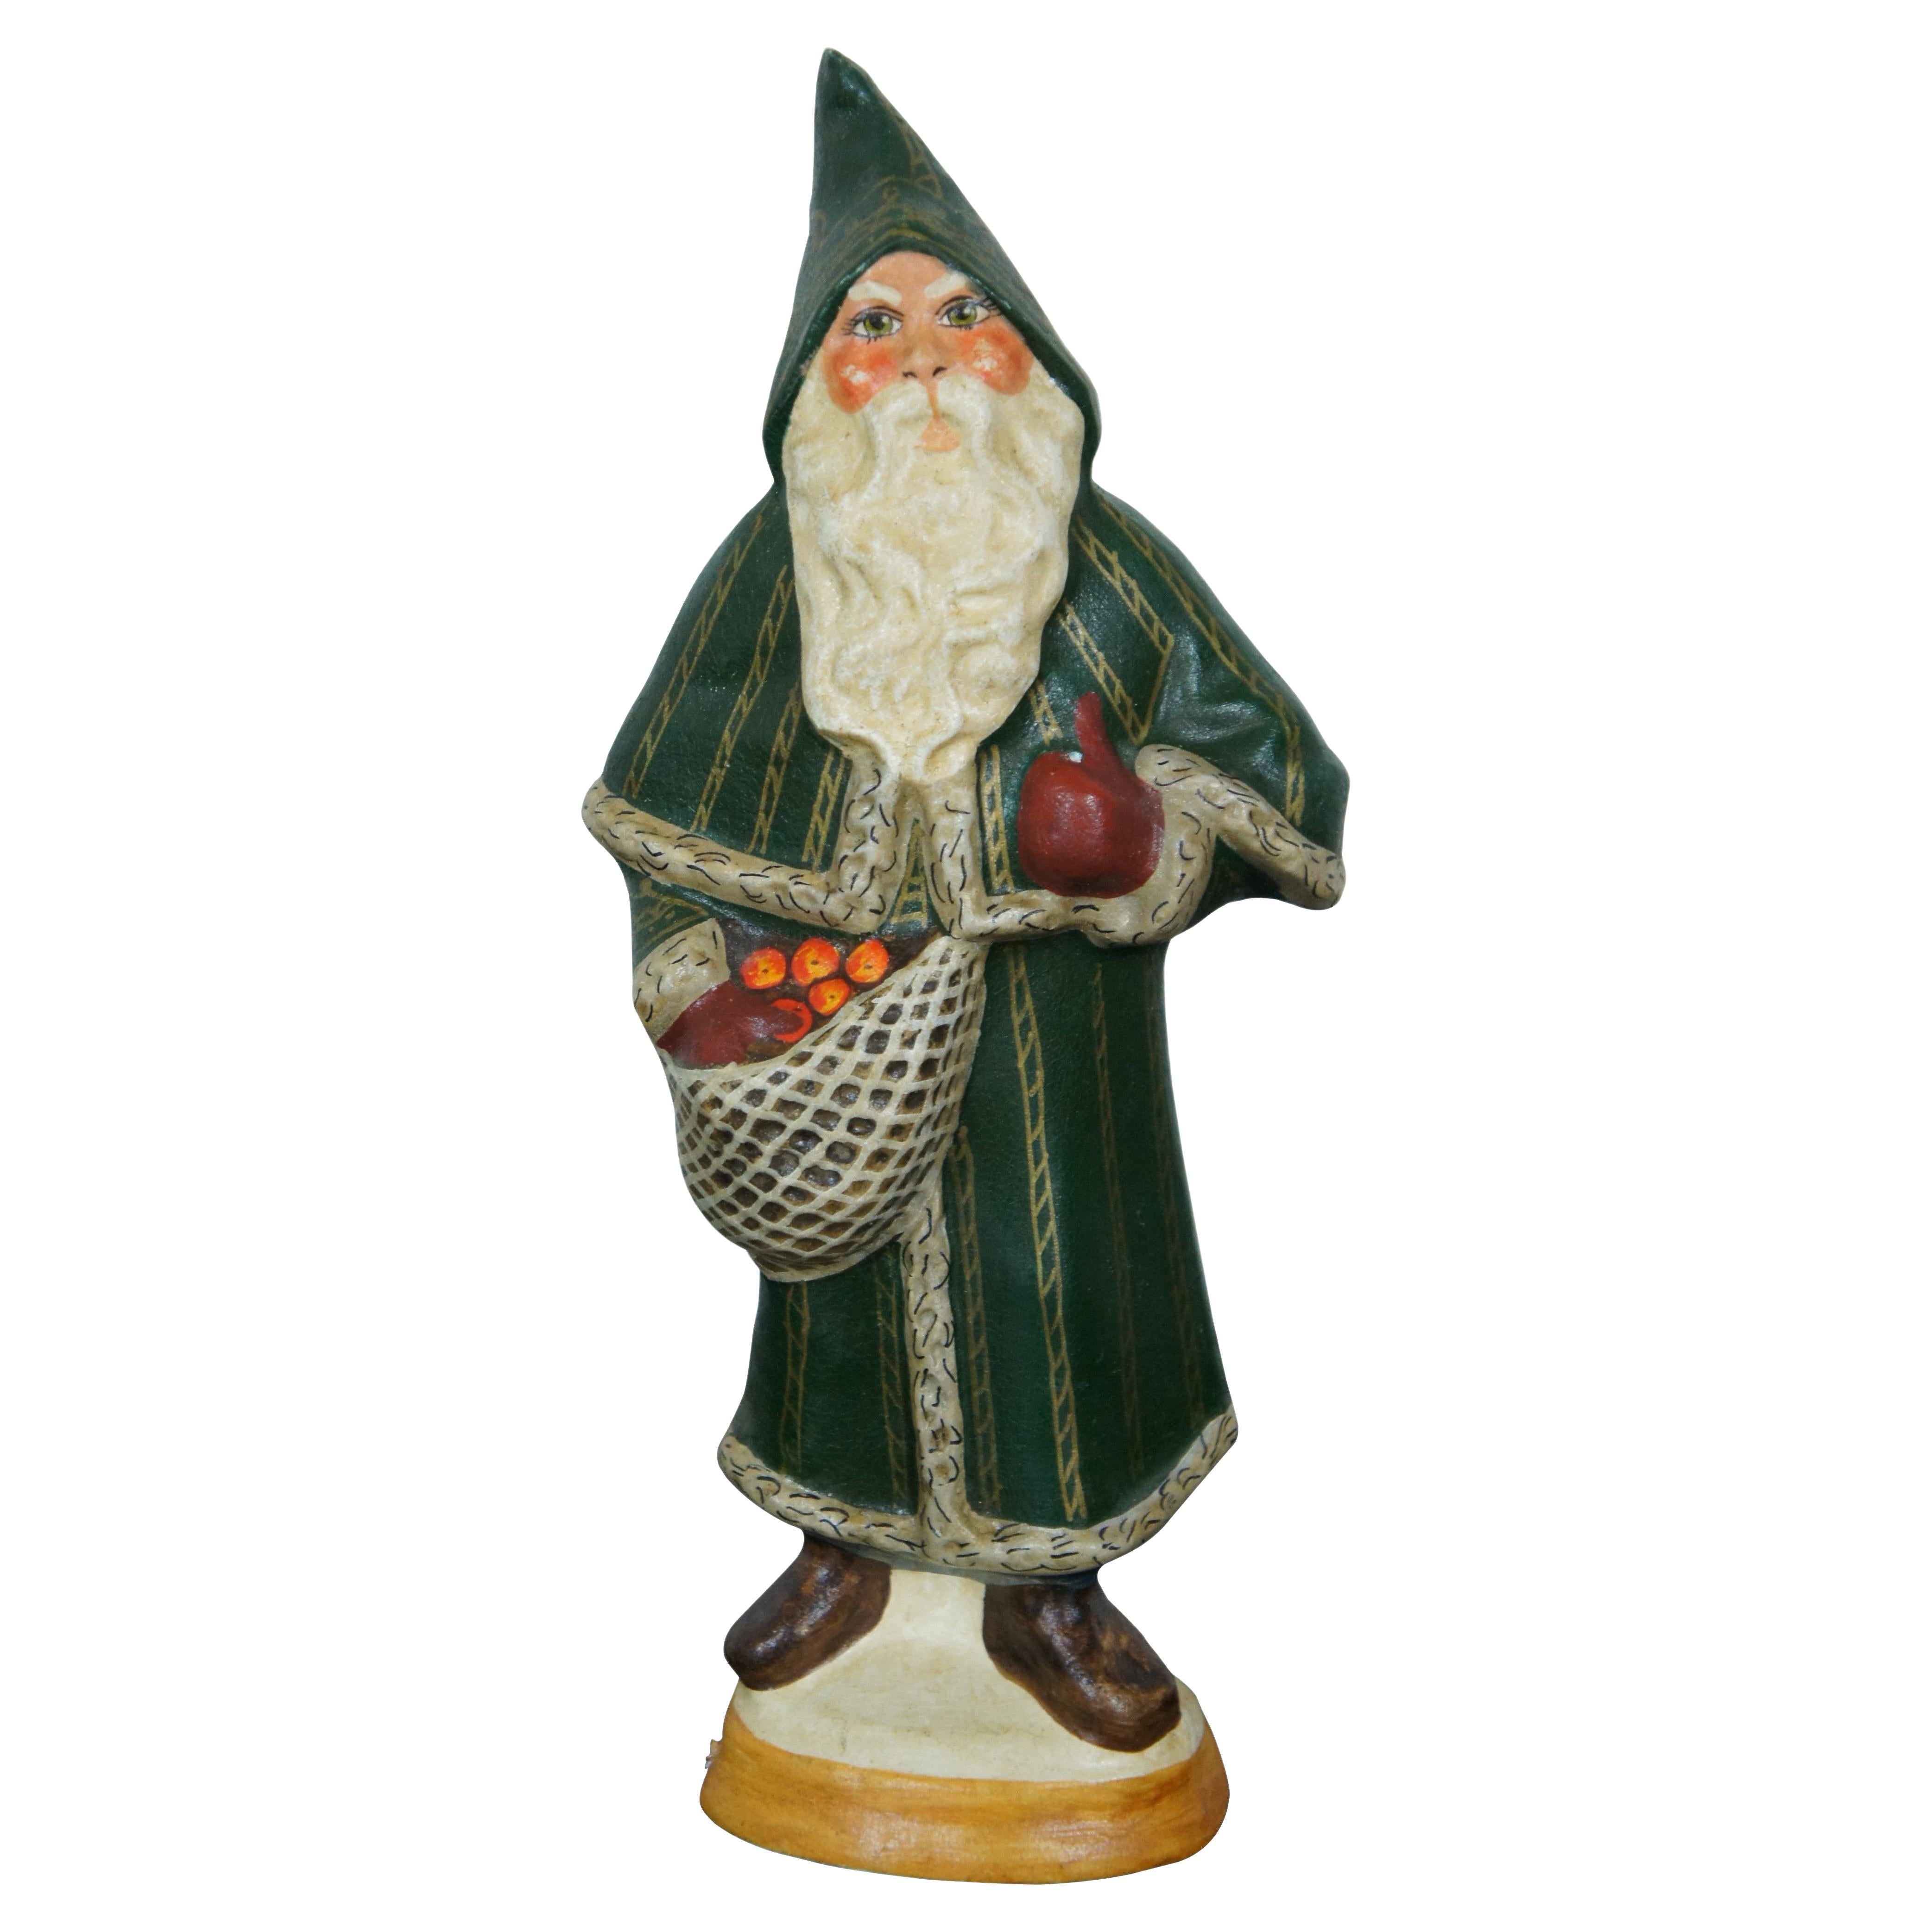 1992 Vaillancourt Folk Art Chalkware Father Christmas Santa Claus #1219 For Sale